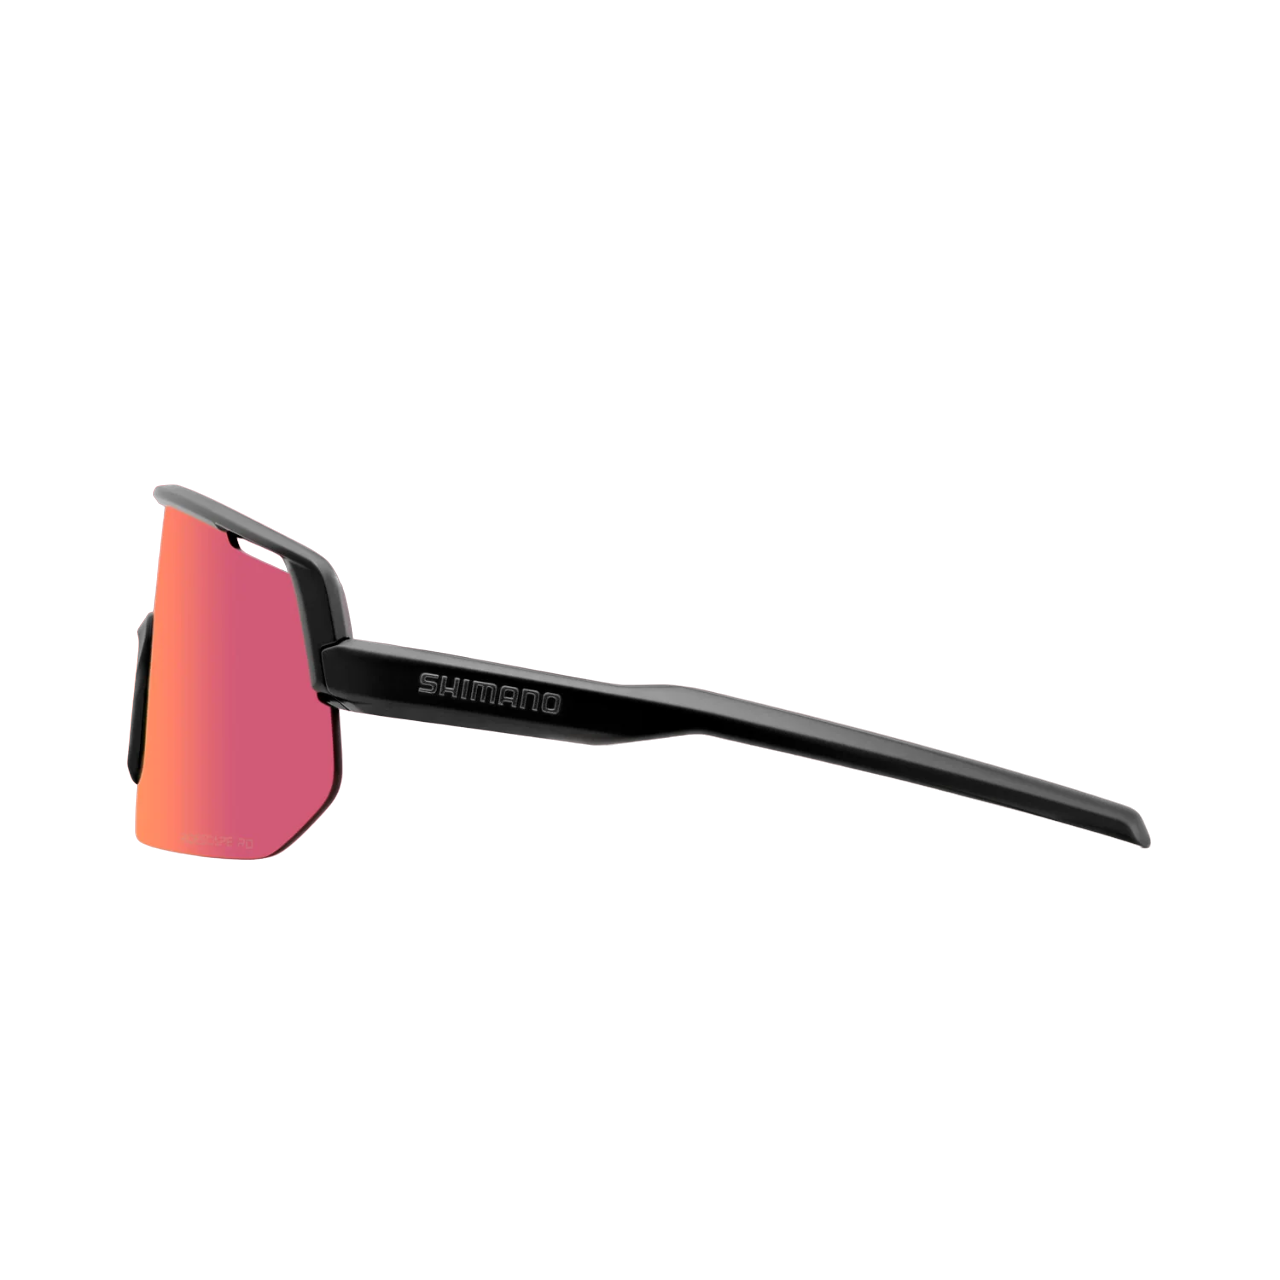 Shimano Technium L Sunglasses - Matt Black - Ridescape Road Lens